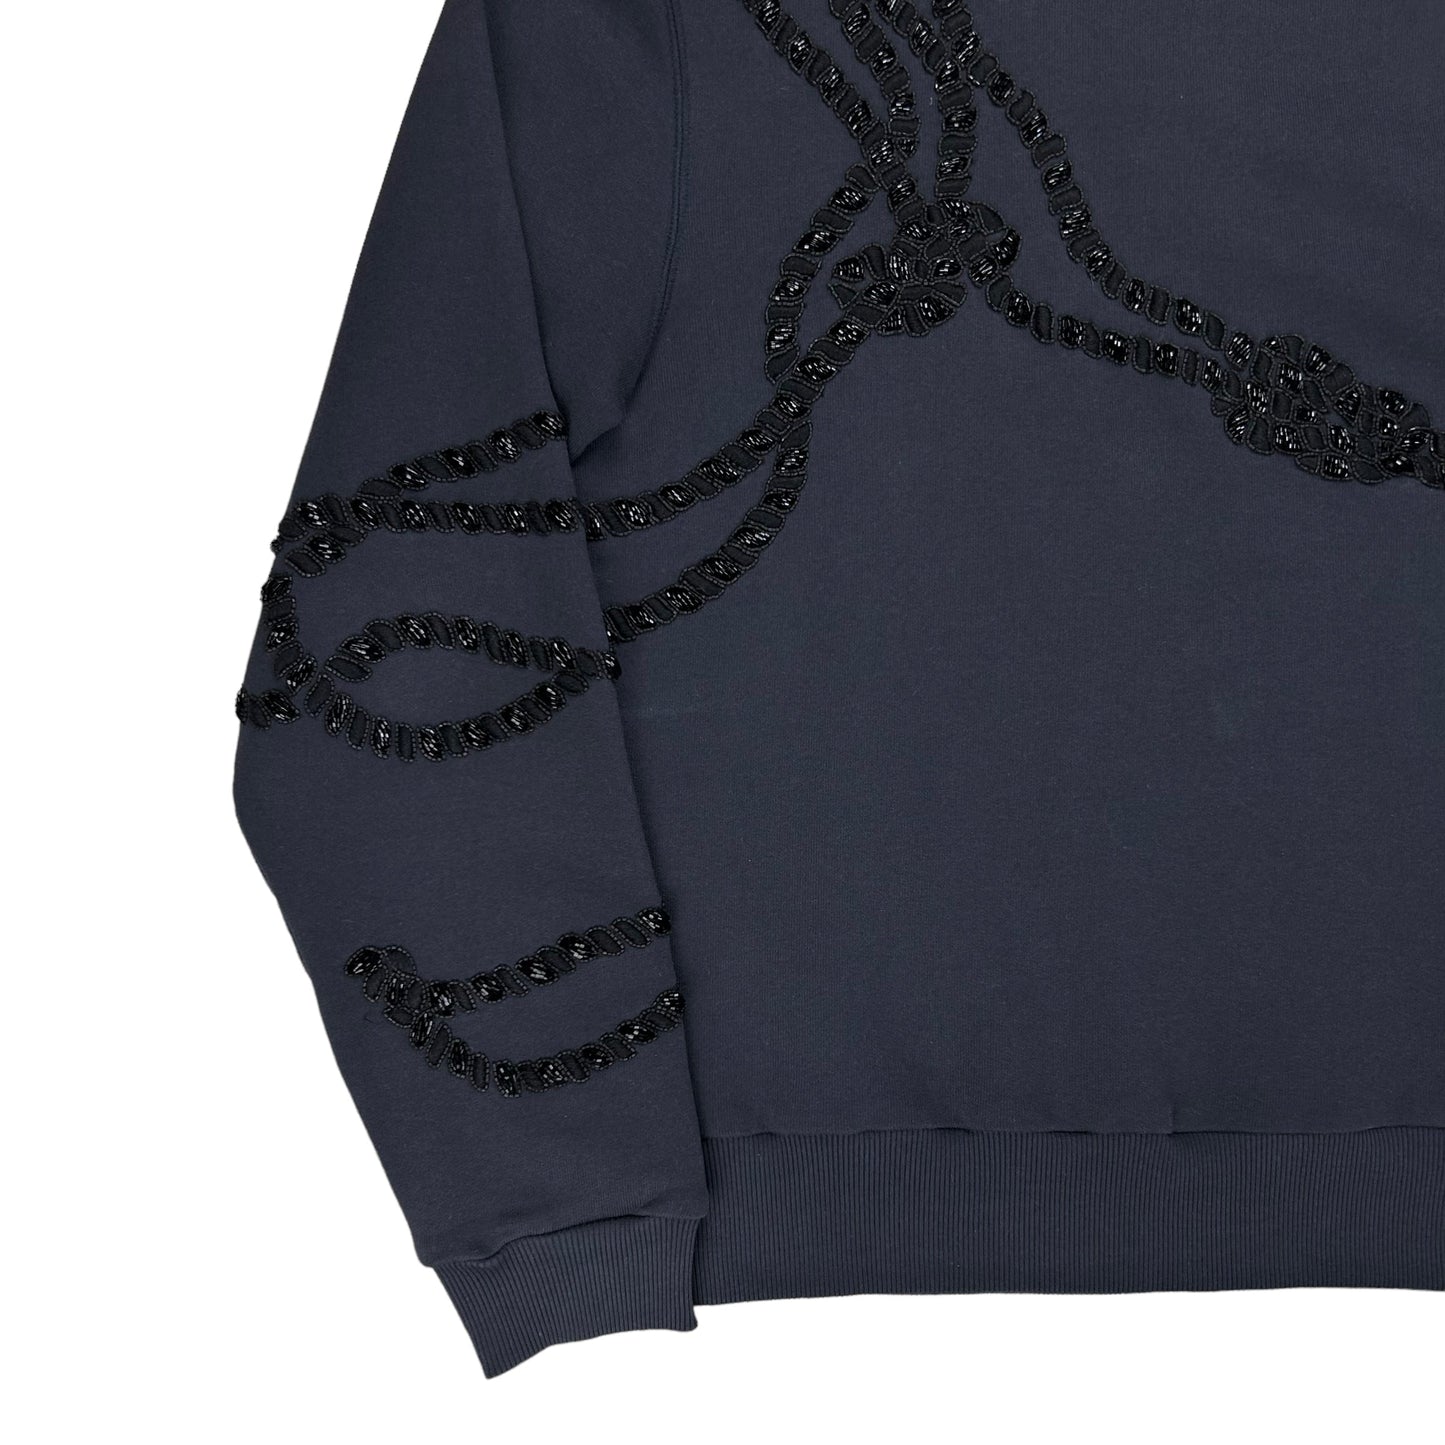 Dries Van Noten Embellished Rope Sweater - AW16